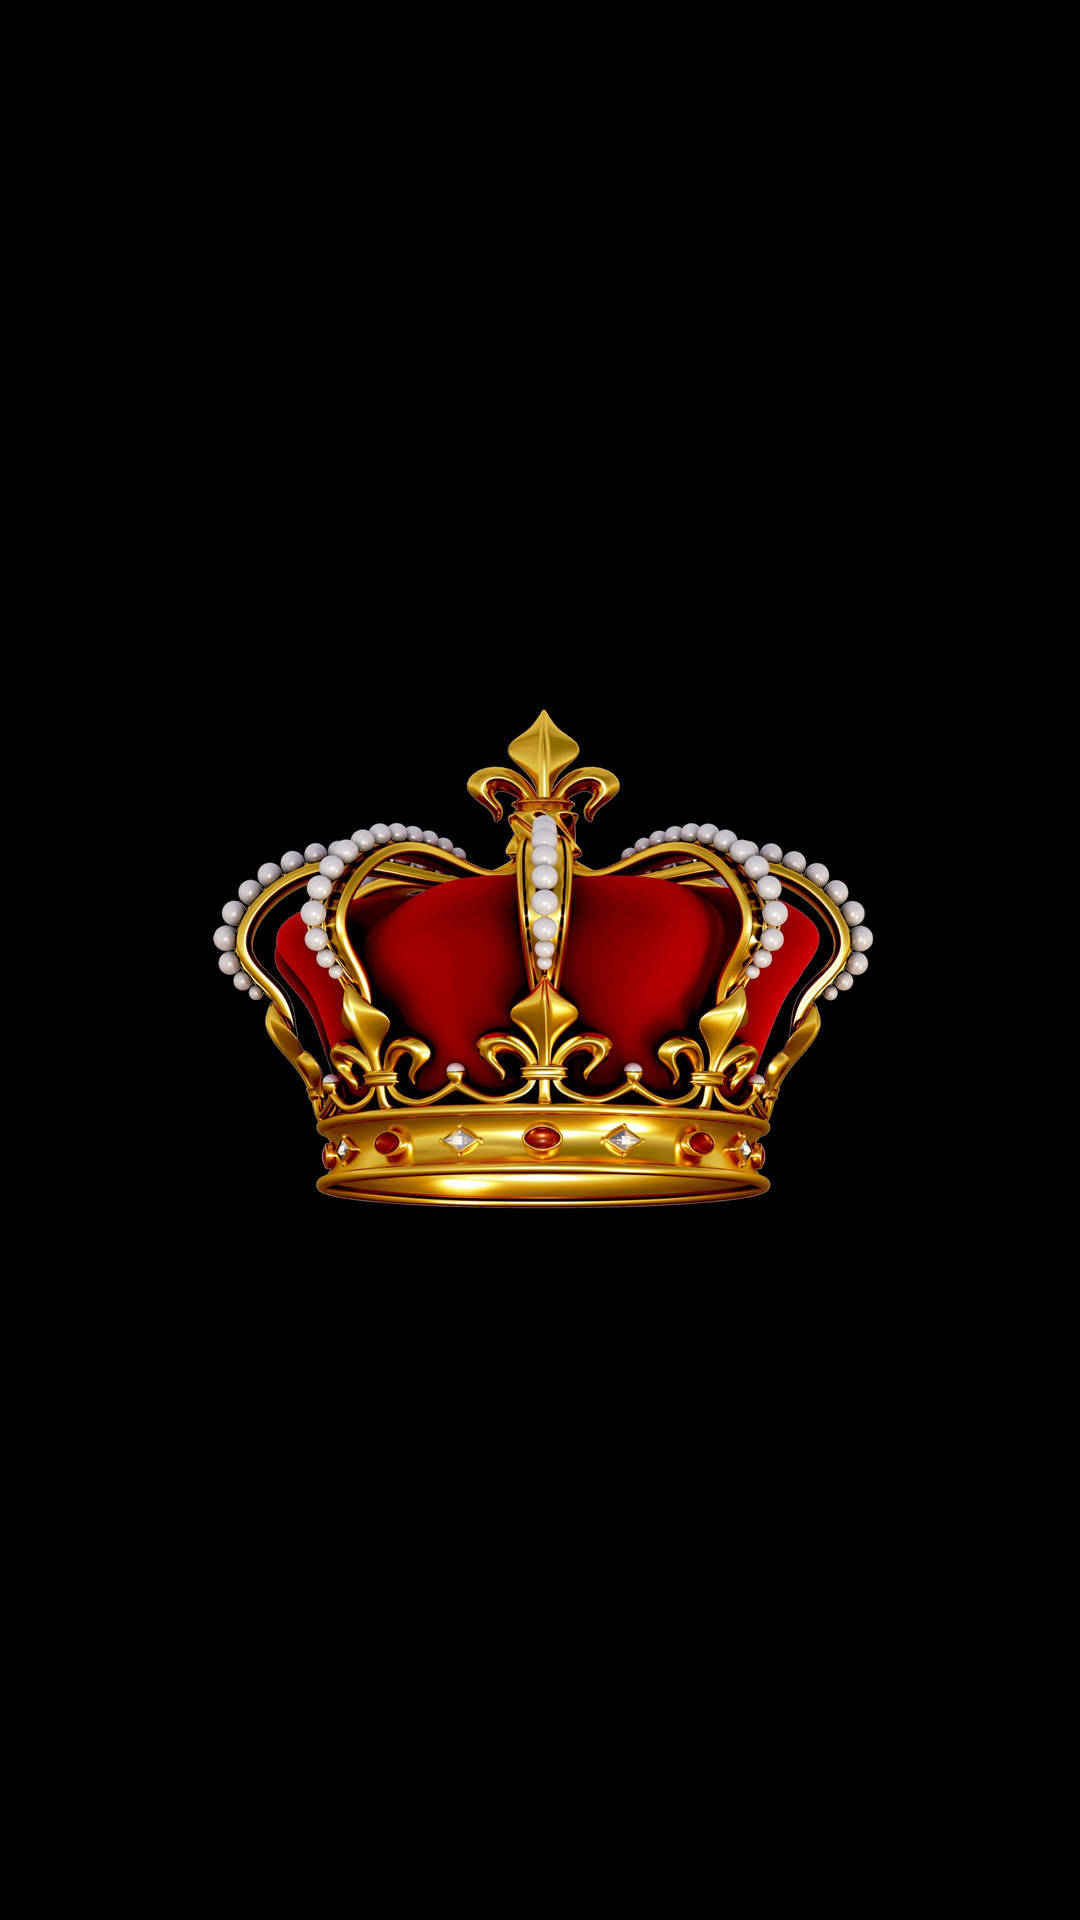 Amoled Android Royal Crown